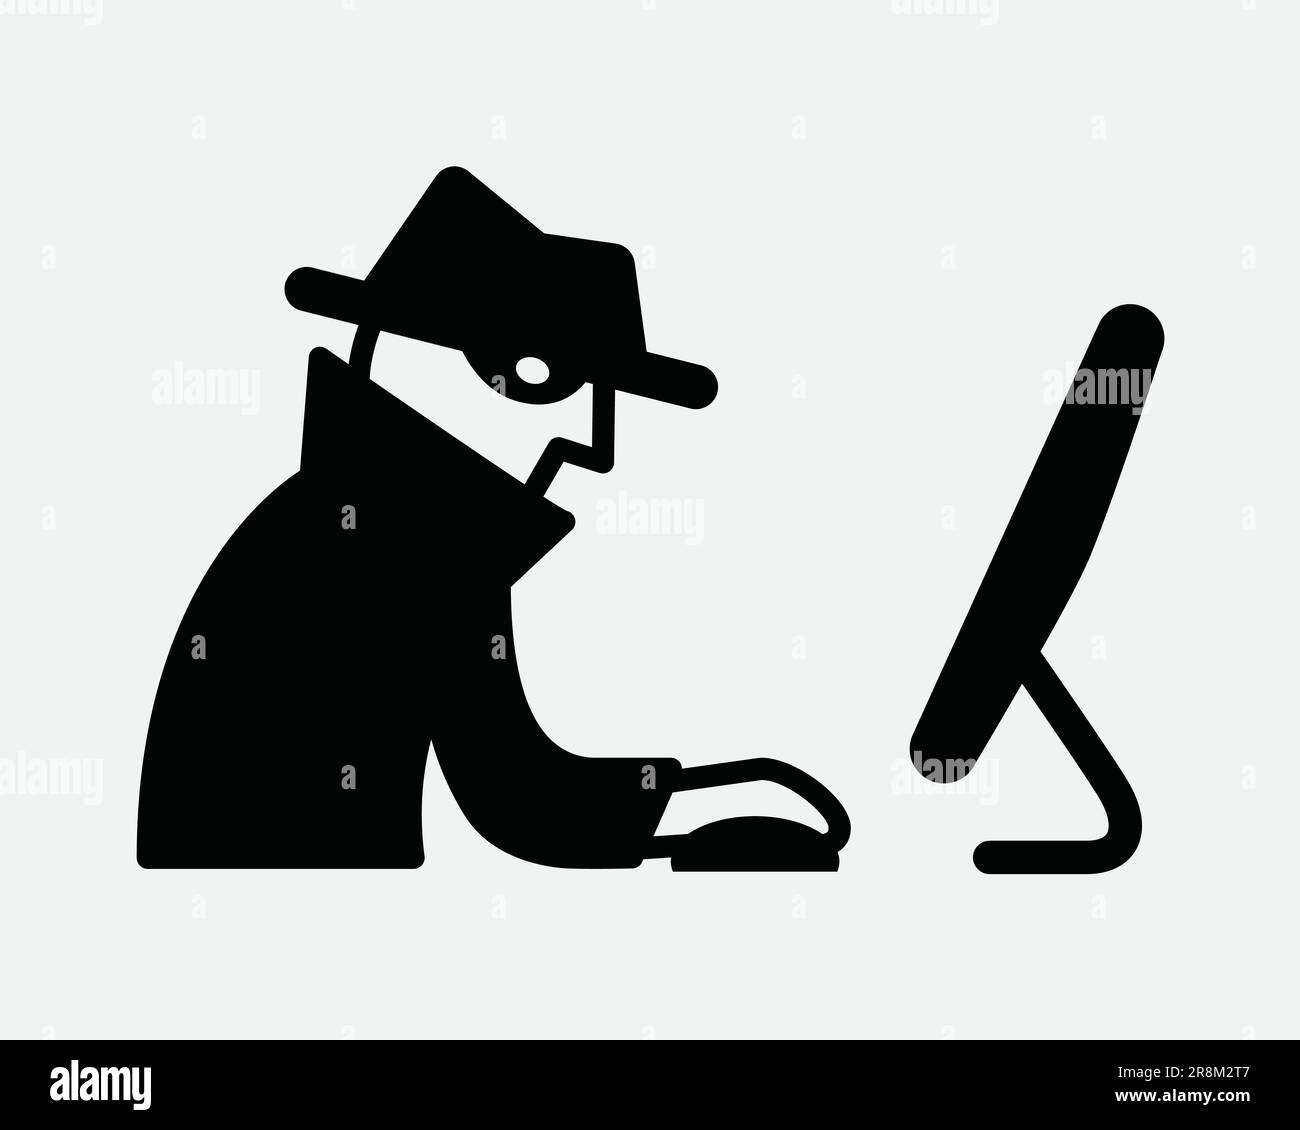 Hacker-Symbol. Criminal Criminal Hacking Hack Thief Web Cyber Security Spy Steal. Schwarzes weißes Schild Illustration Grafik Clipart EPS-Vektor Stock Vektor